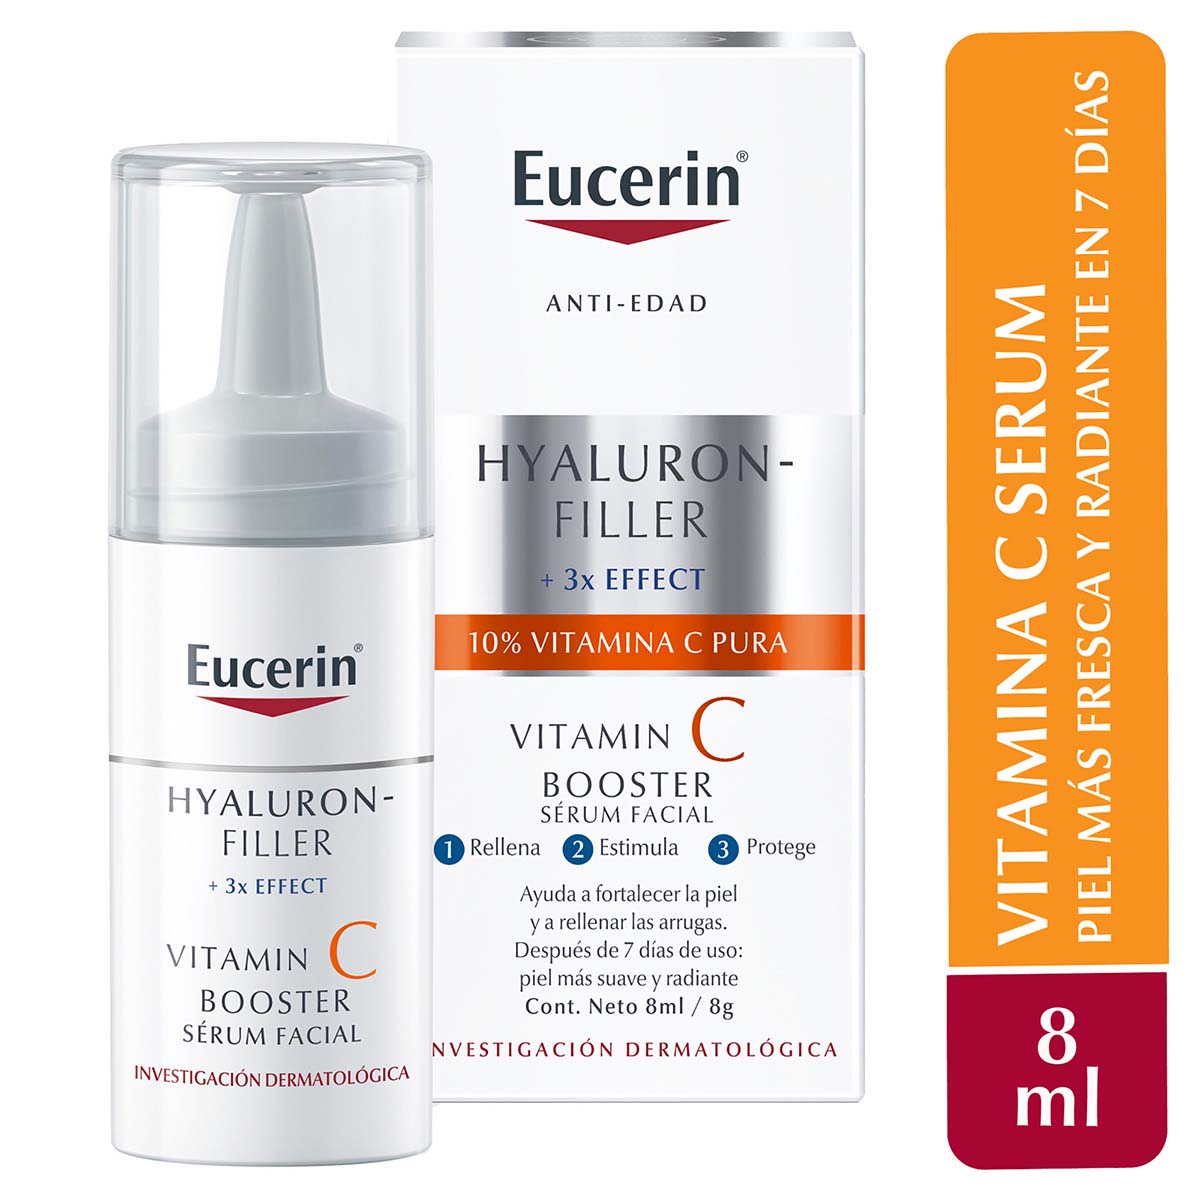 Eucerin booster anti edad facial hyaluron-filler vitamina C 8ml.